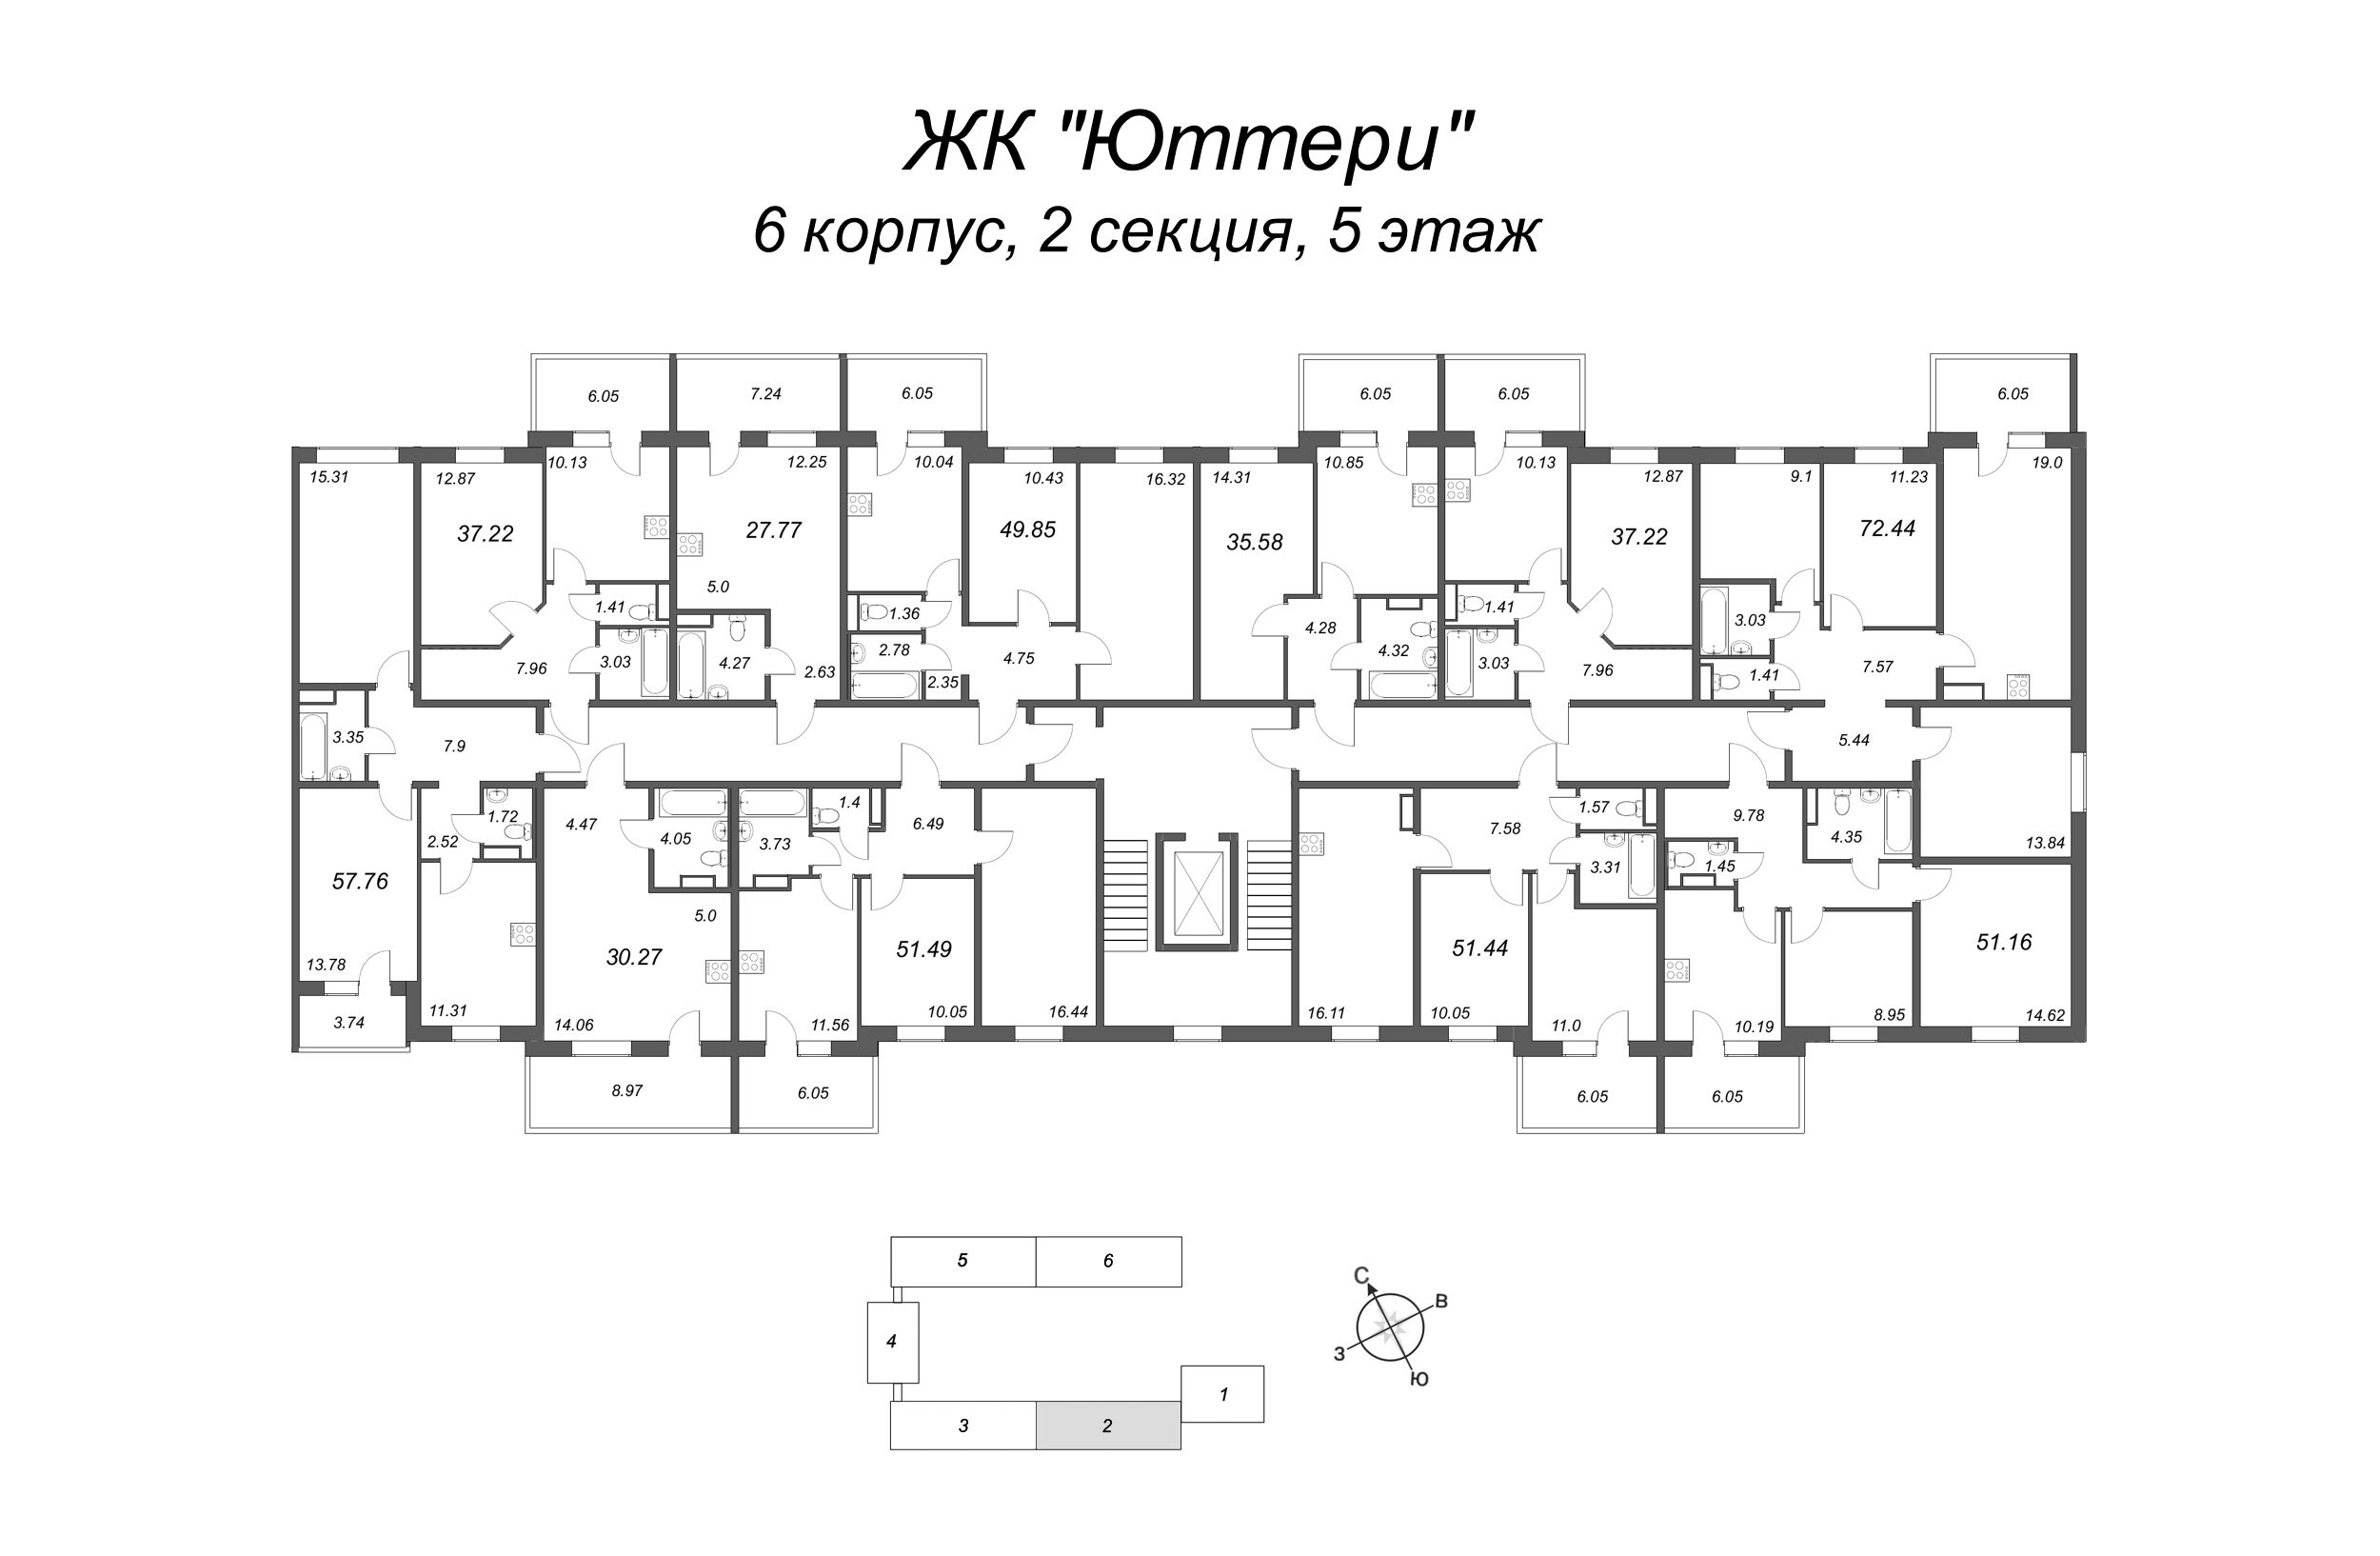 4-комнатная (Евро) квартира, 70.62 м² - планировка этажа